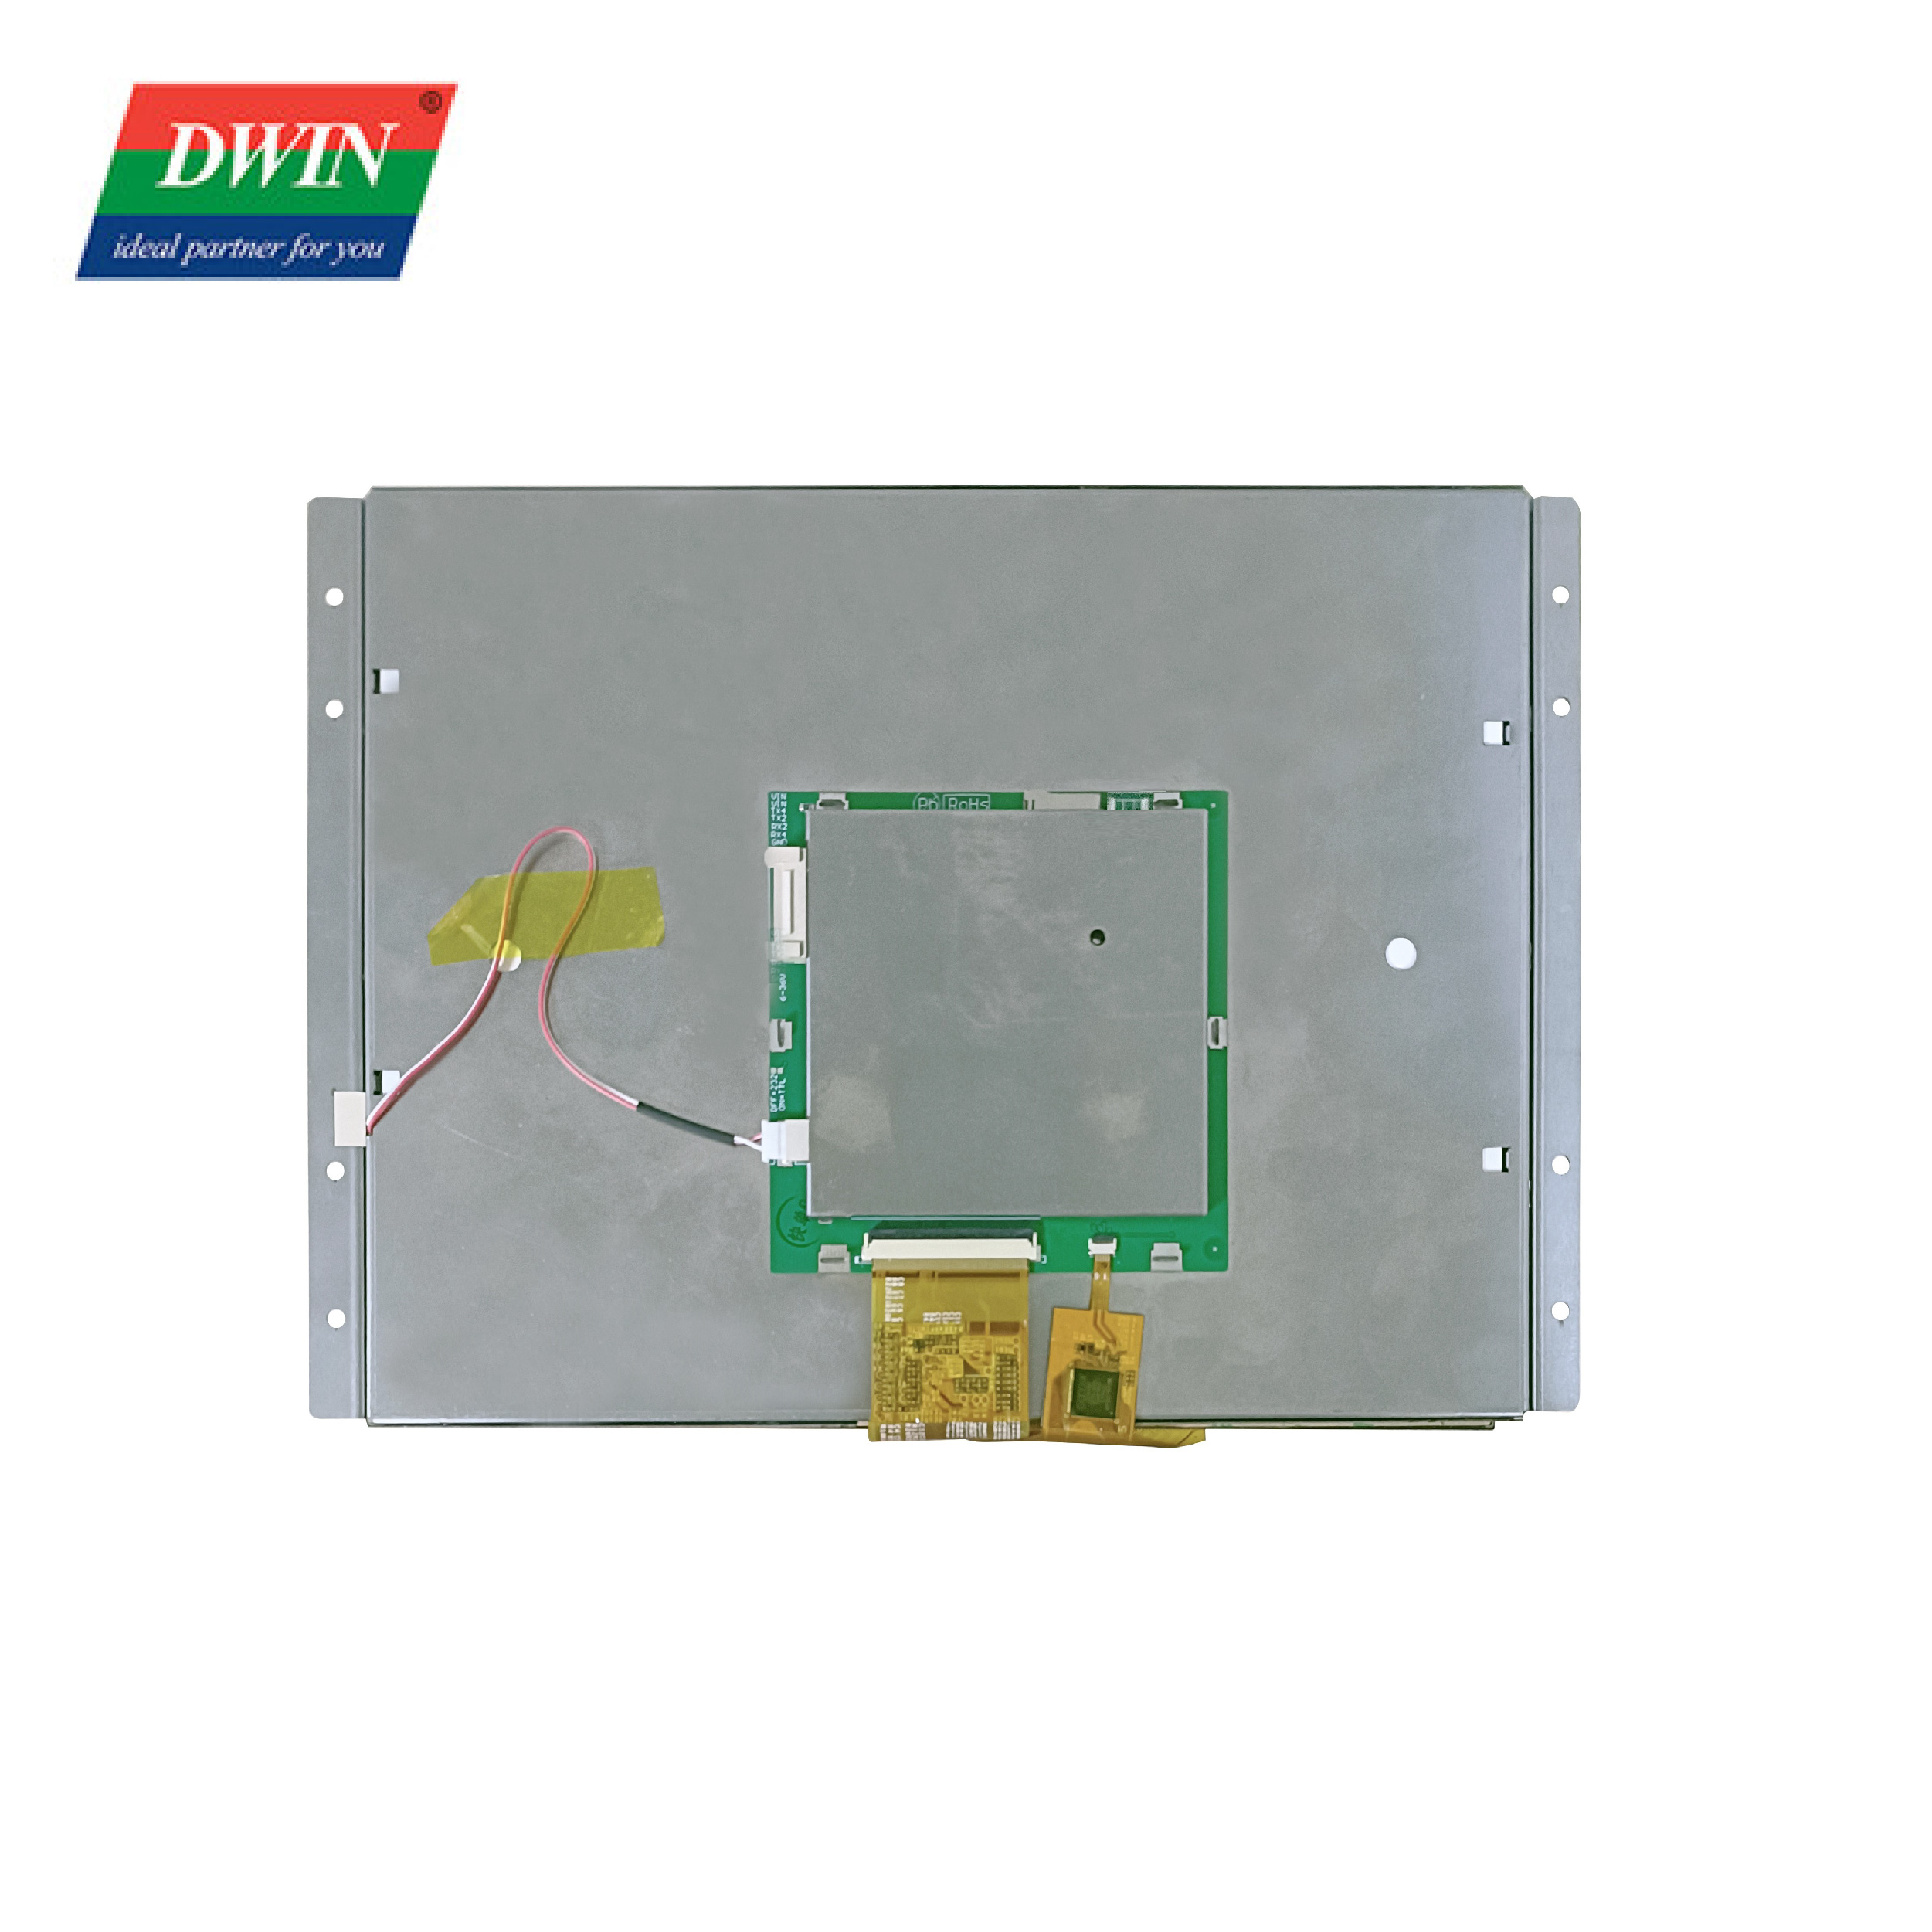 Panel Tutul LCD 10.4 Inch DMG80600L104_01W (Kelas Konsumen)